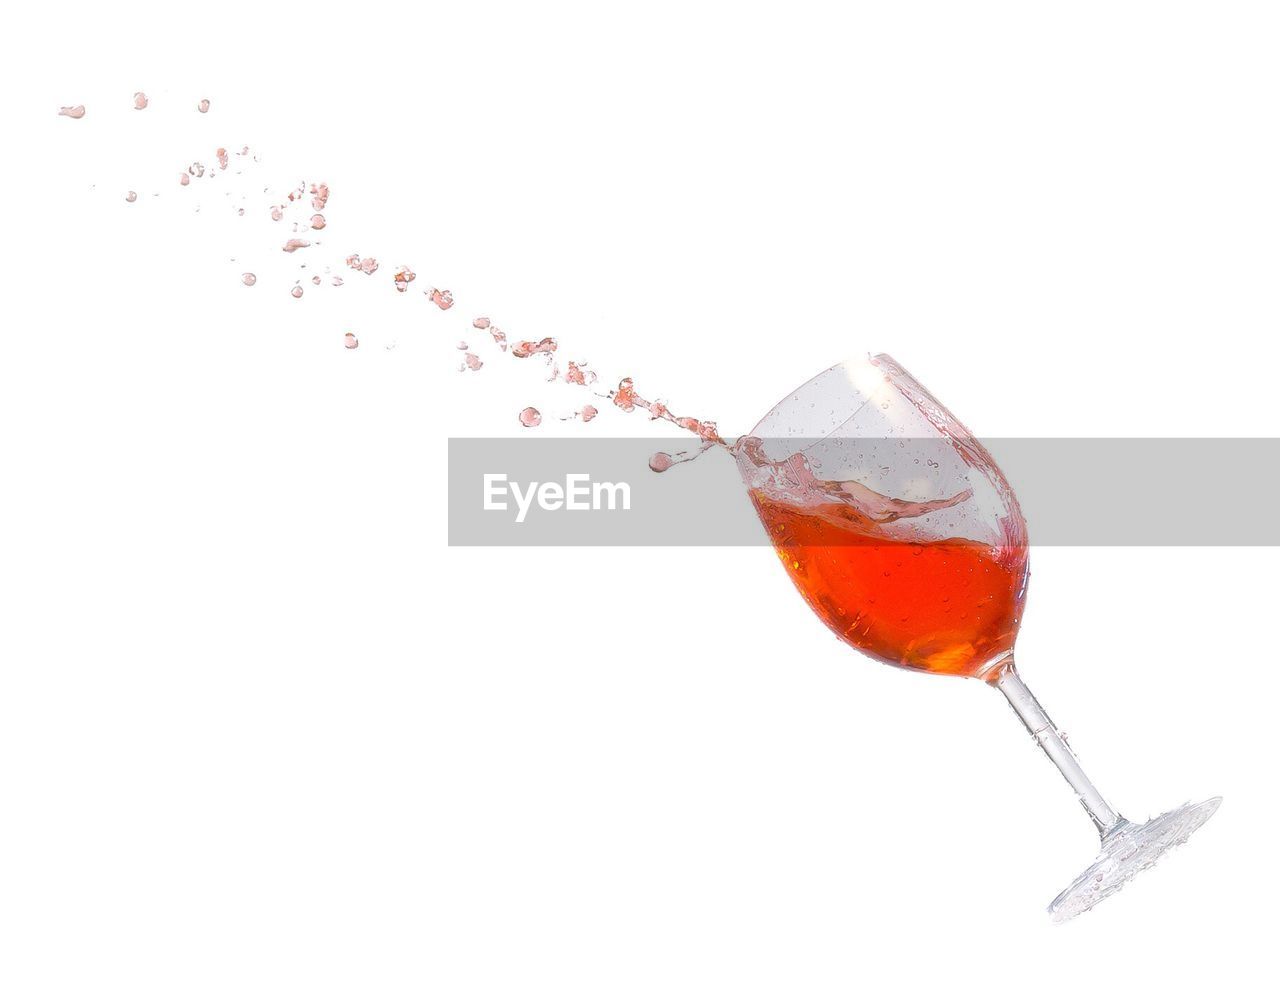 Wine splashing in glass against white background